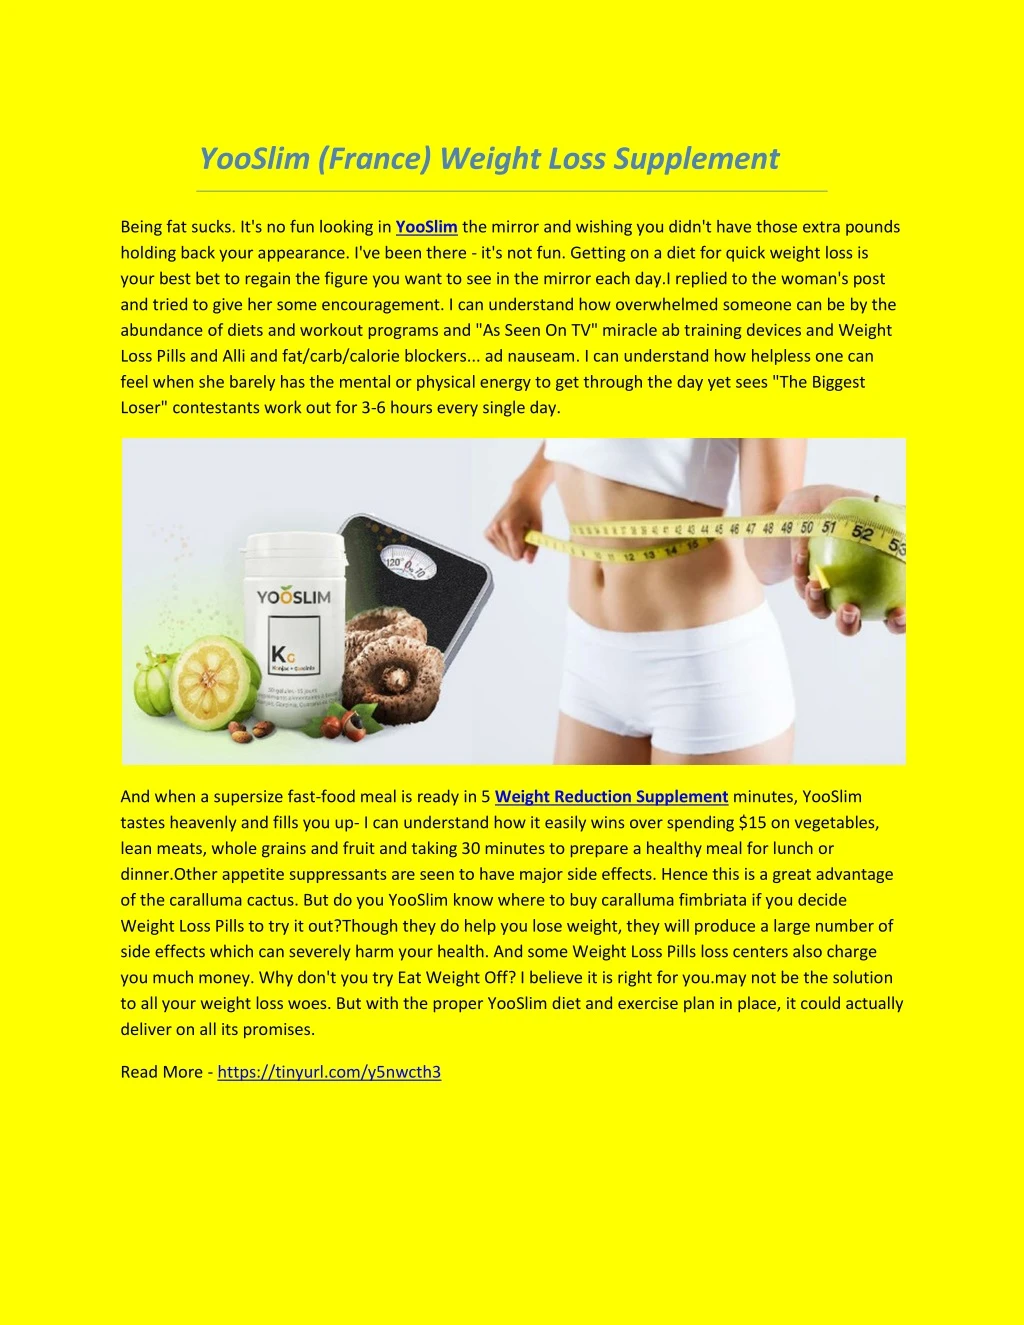 yooslim france weight loss supplement